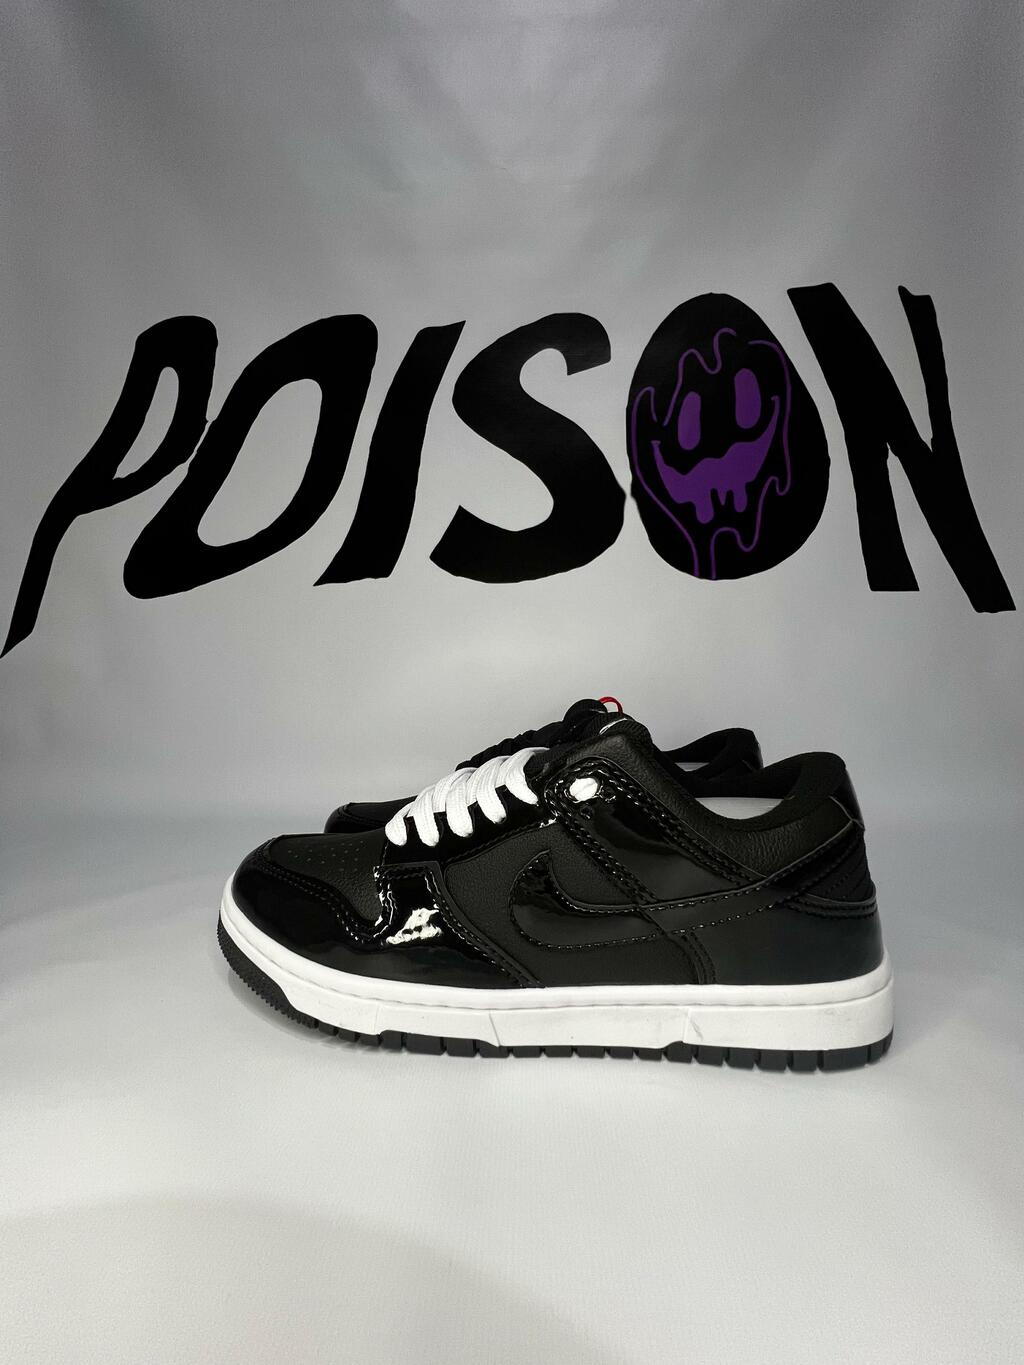 Nike Dunk Low SB - Bright Black - Poison Store